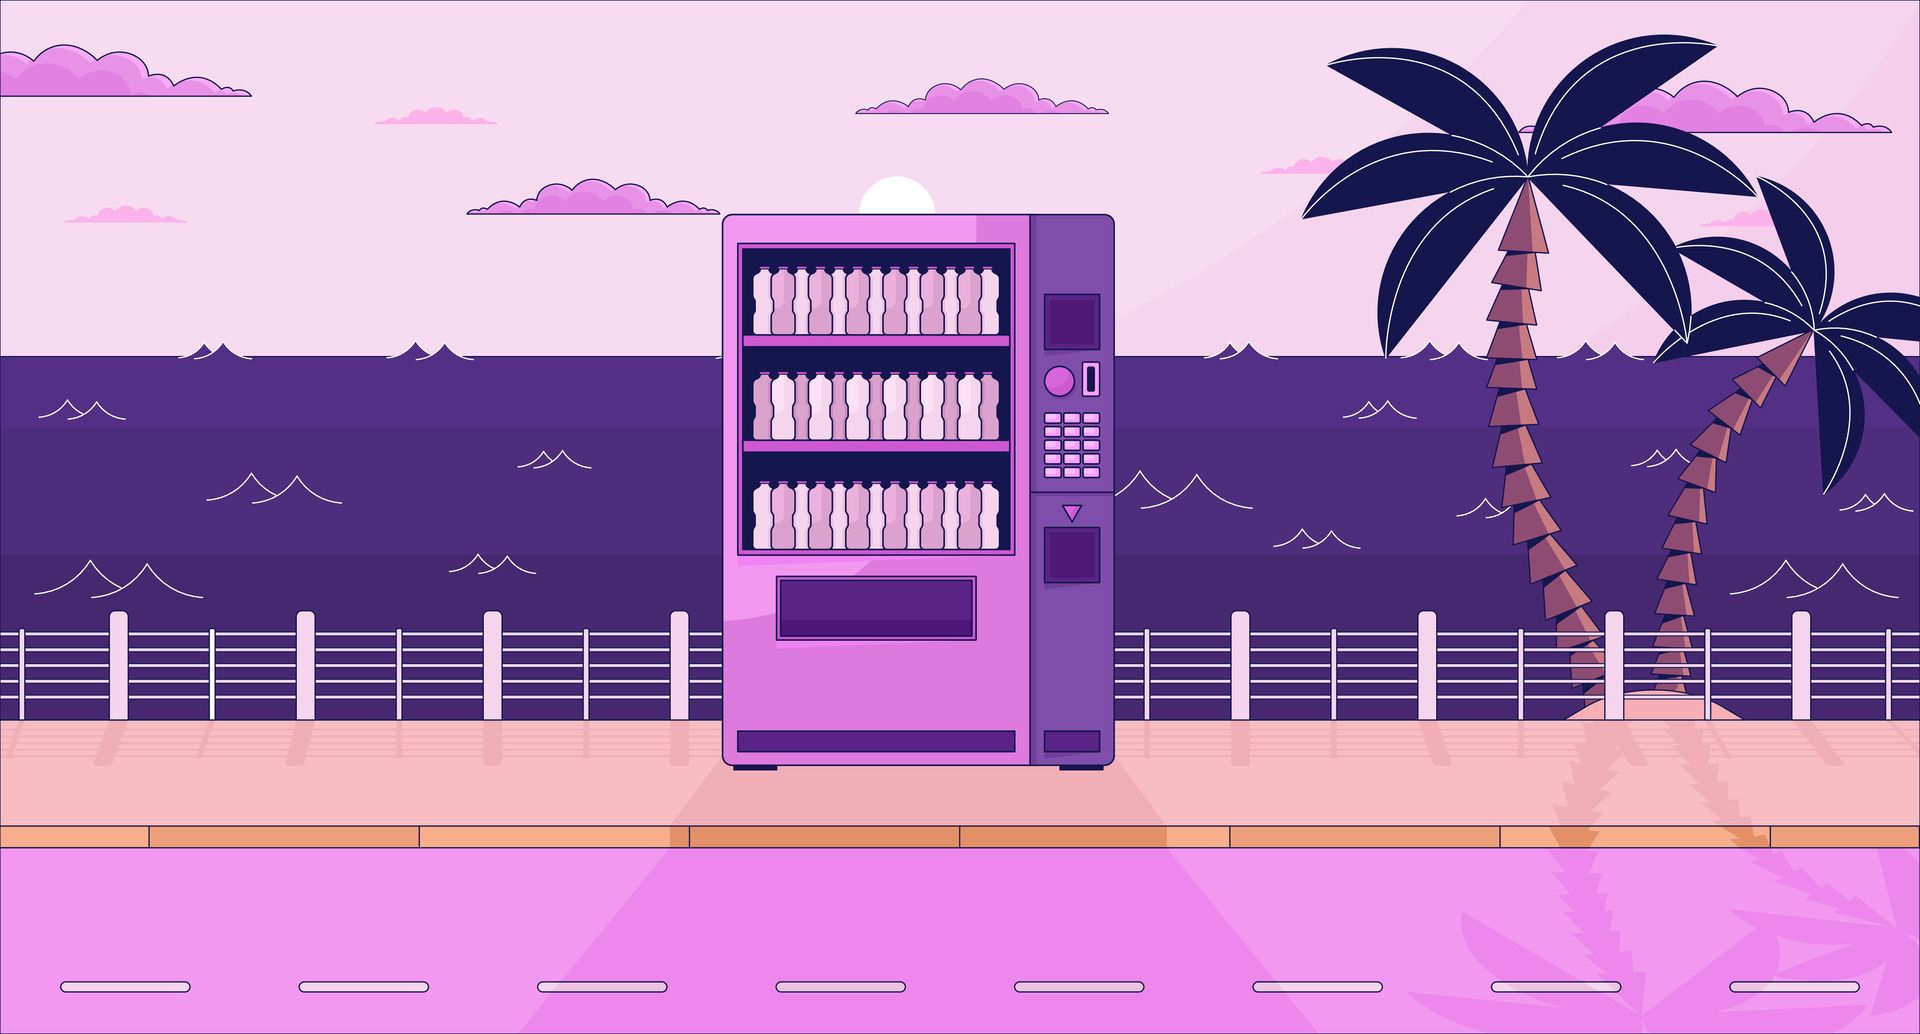 Drink vending machine on dusk waterfront lo fi aesthetic wallpaper. Beverage automat on sundown quay 2D vector cartoon landscape illustration, purple lofi background. 90s retro album art, chill vibes Vector Art